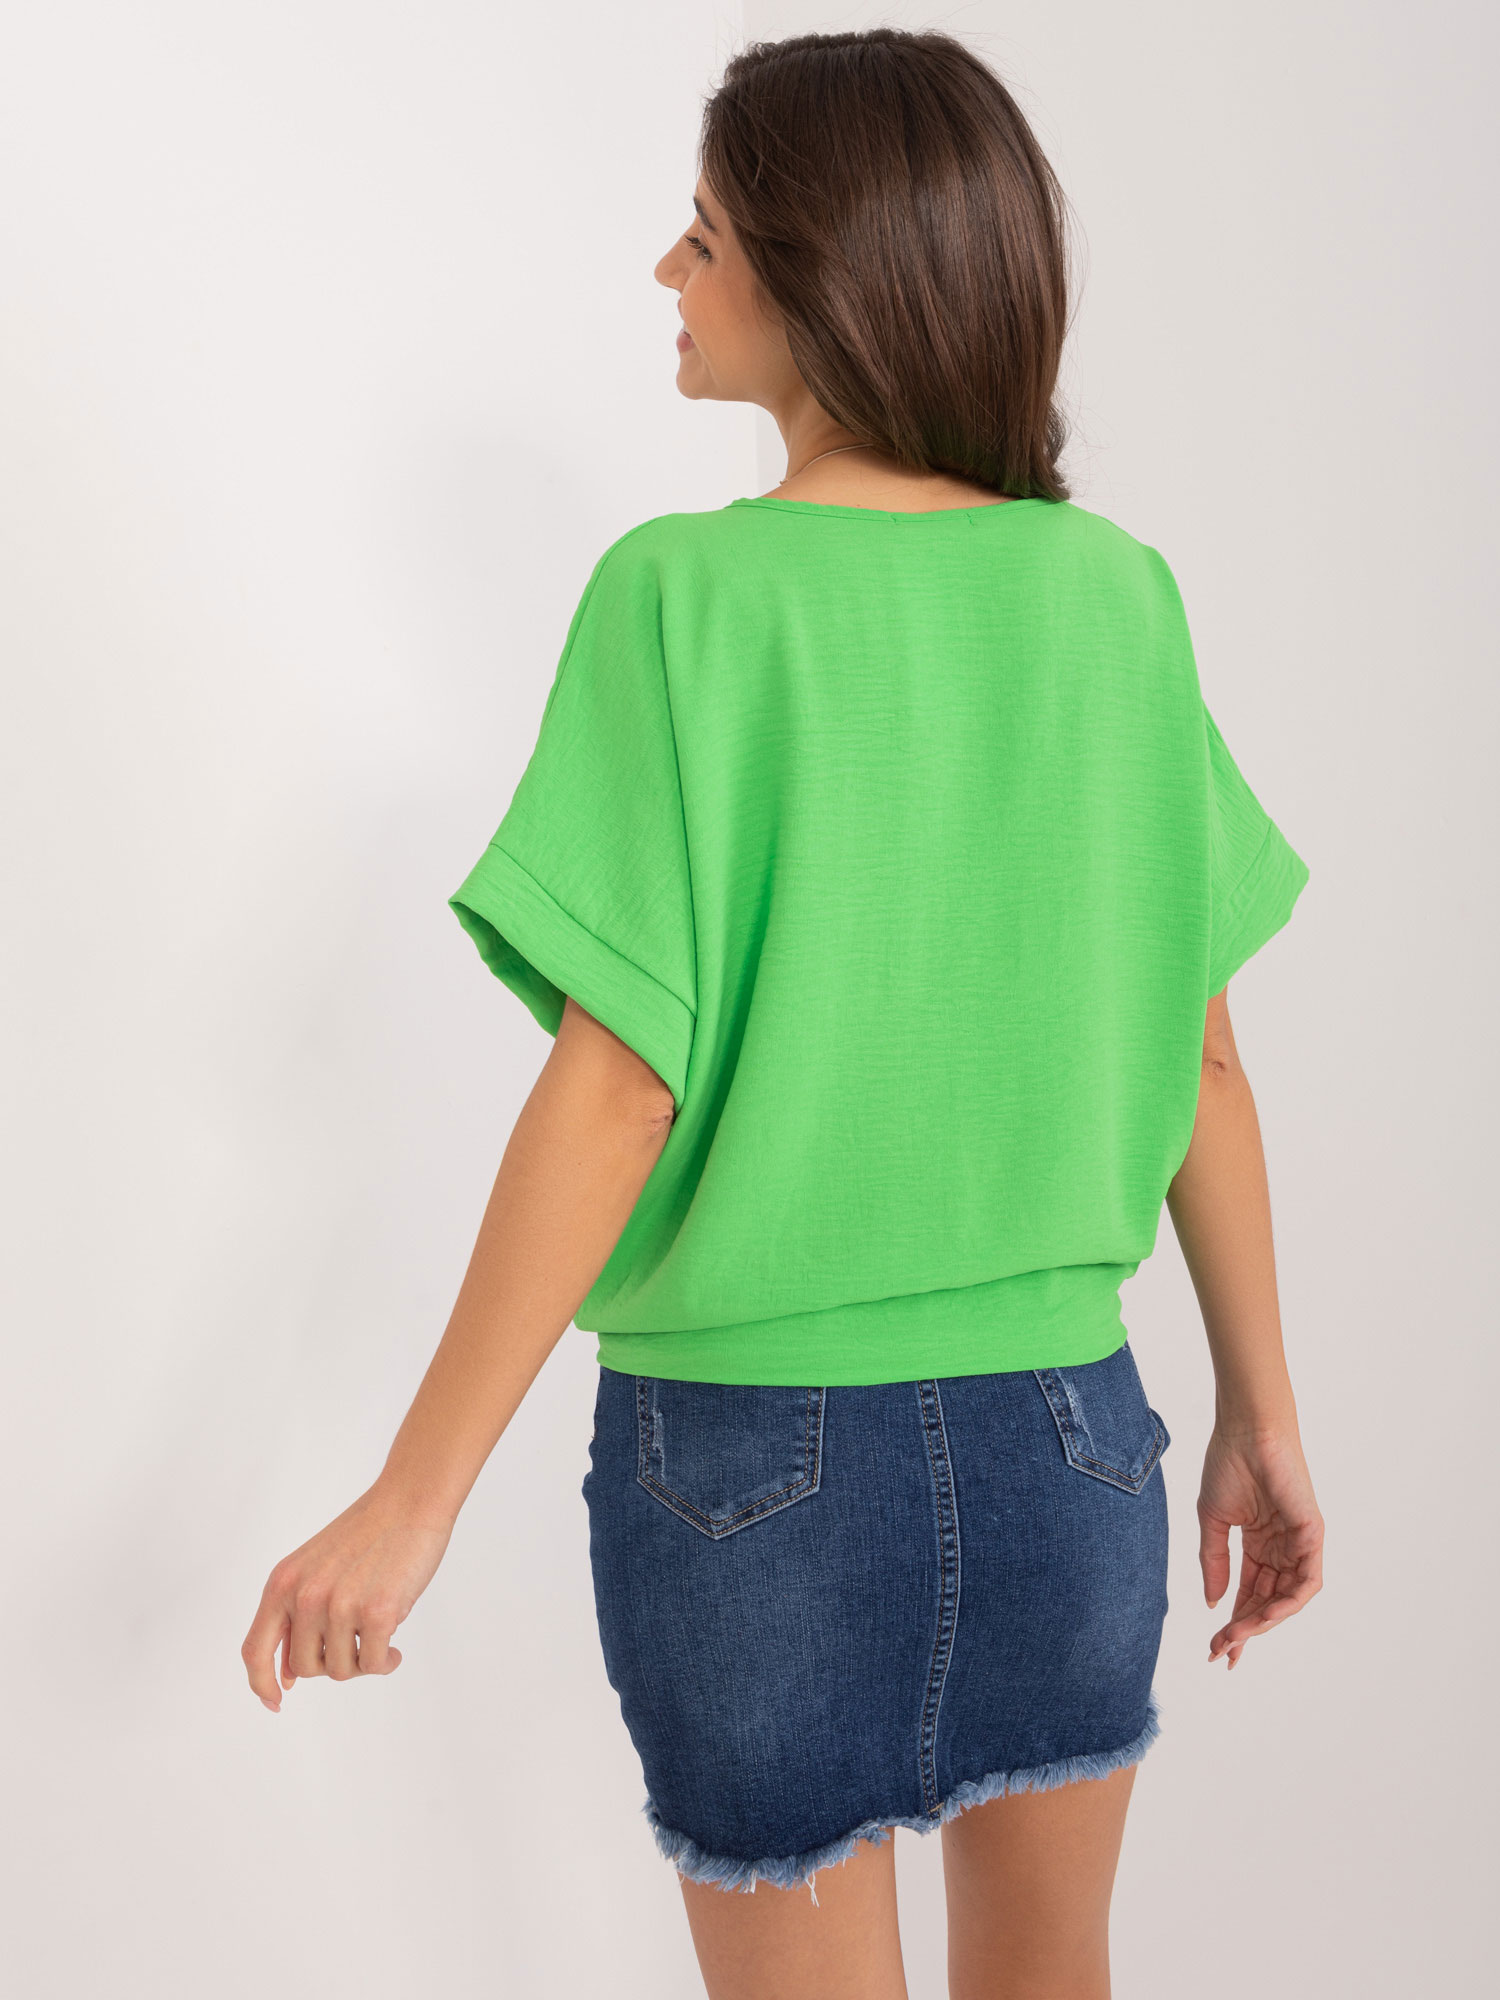 damska bluzka, elegantna damska bluzka, damsky top, zelena bluzka